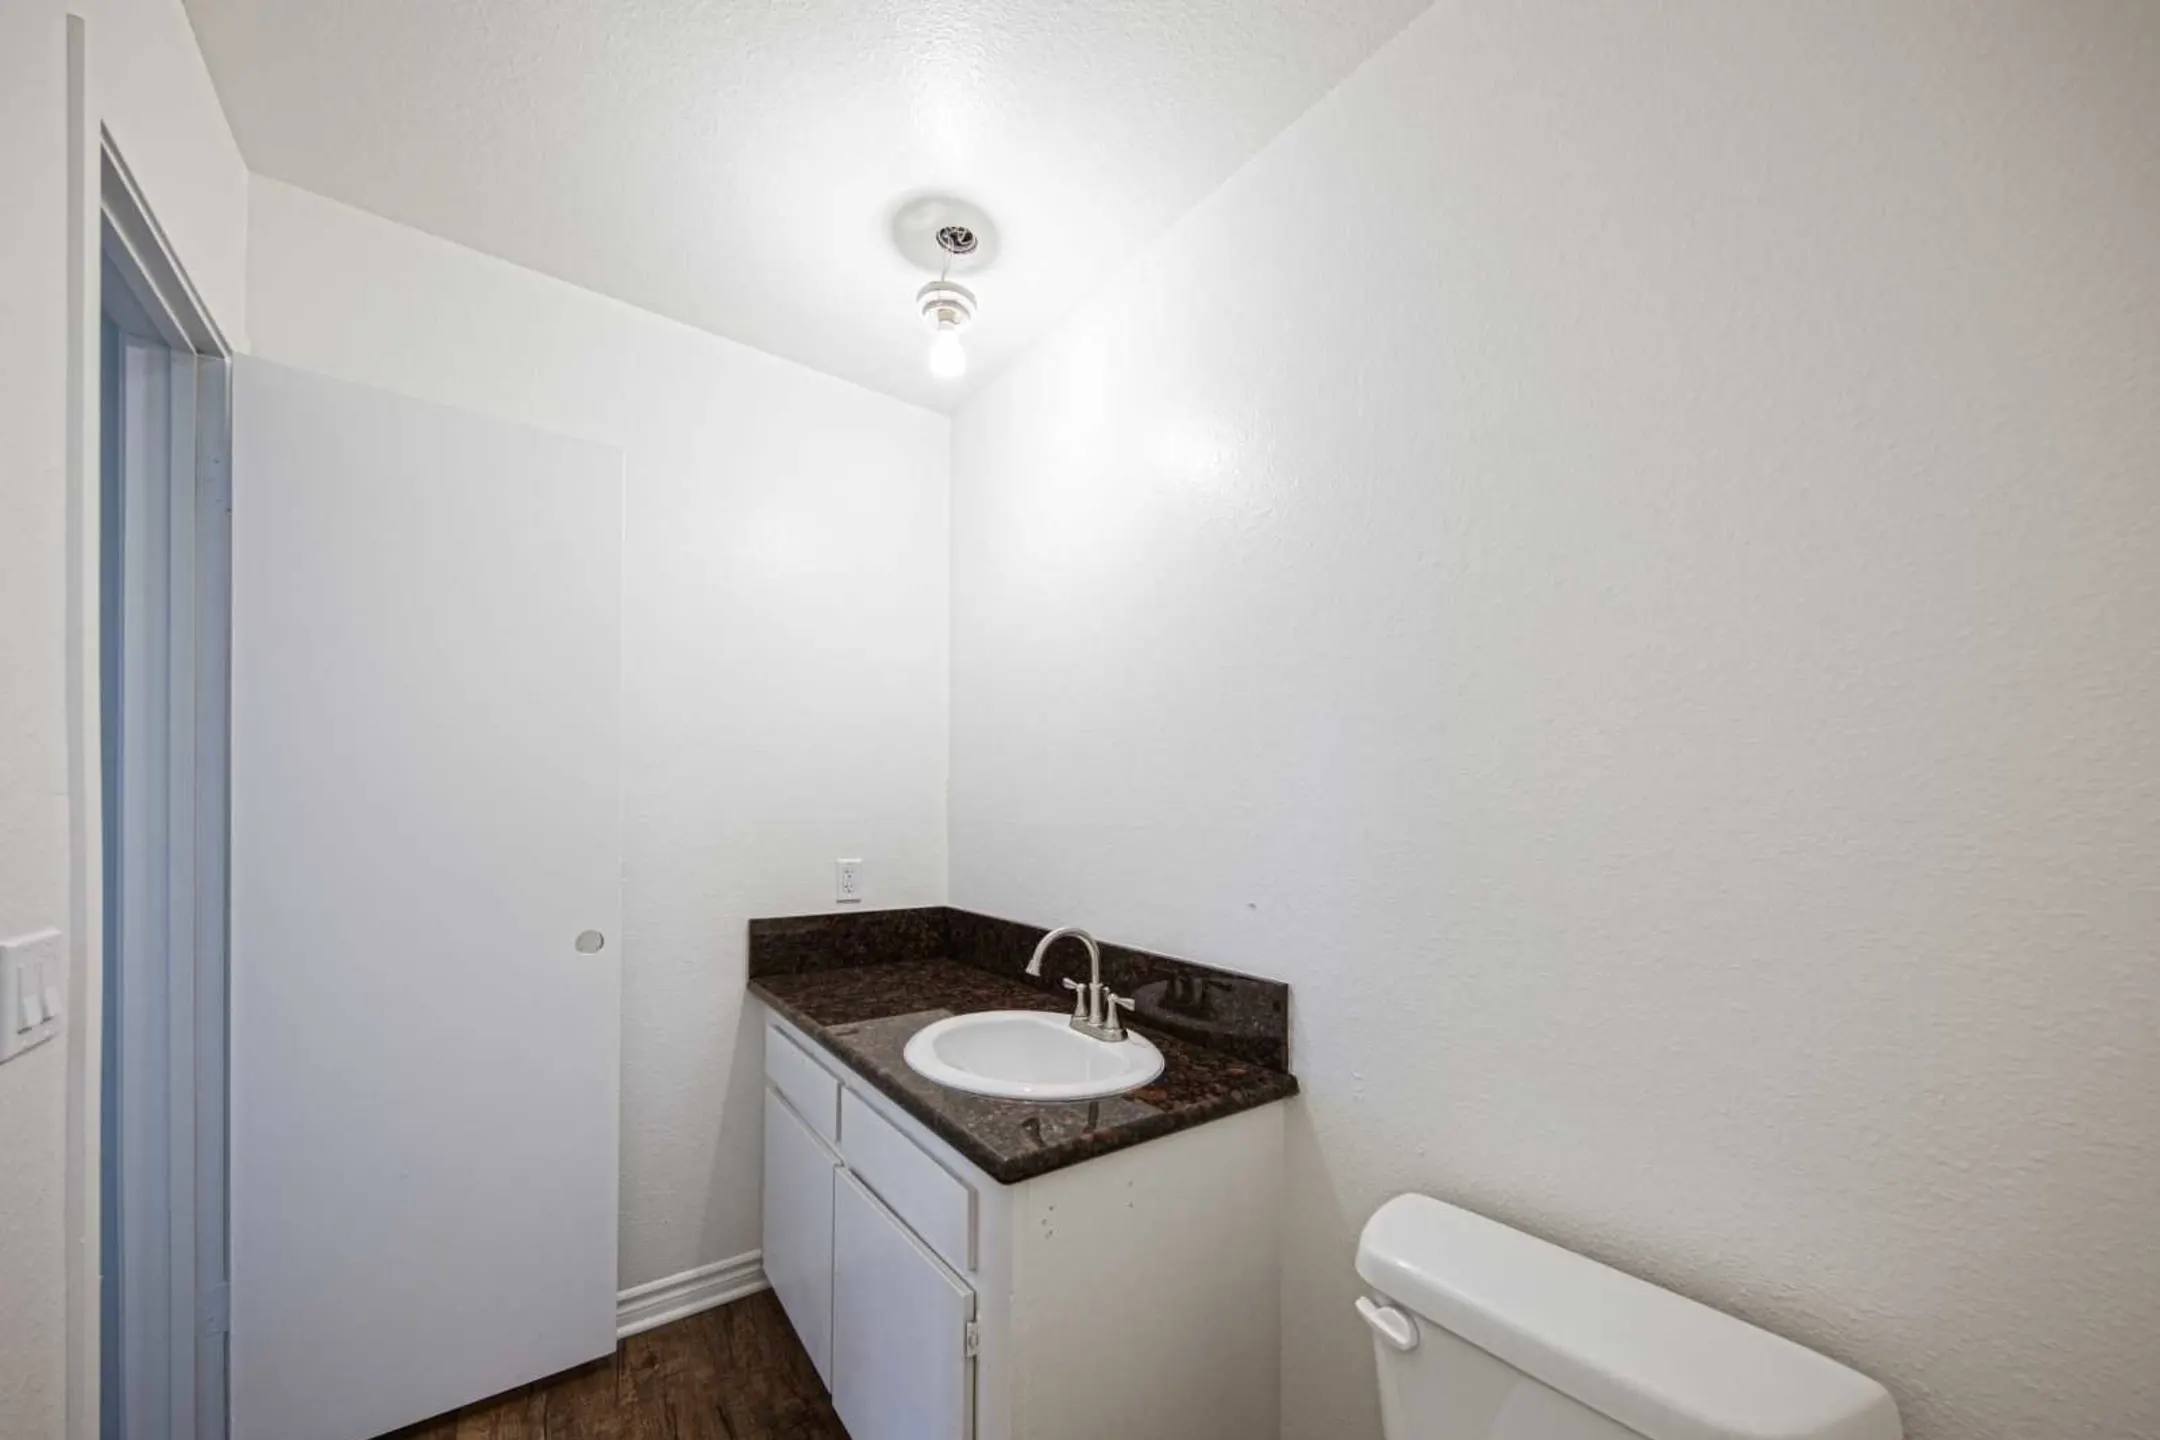 Bathroom - Kimberly Thor - Downey, CA